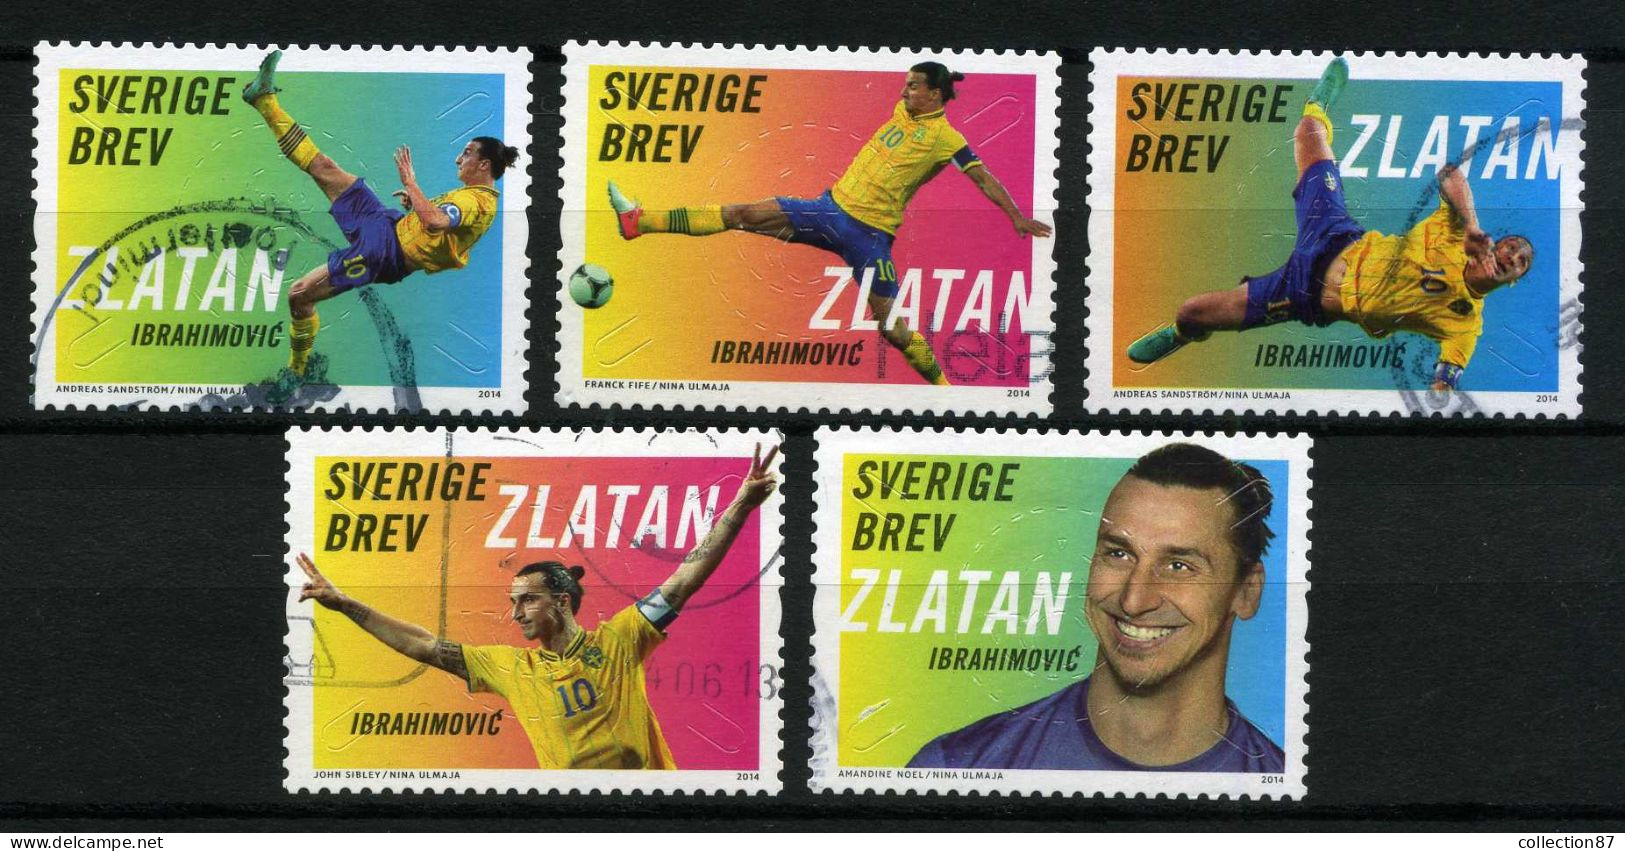 Réf 77 < -- SWEDEN 2014 < Yvert N° 2961 à 2965 Ø Used -- > Football Zlatan Ibrahinovic Foot Footballeur - Soccer - Usados